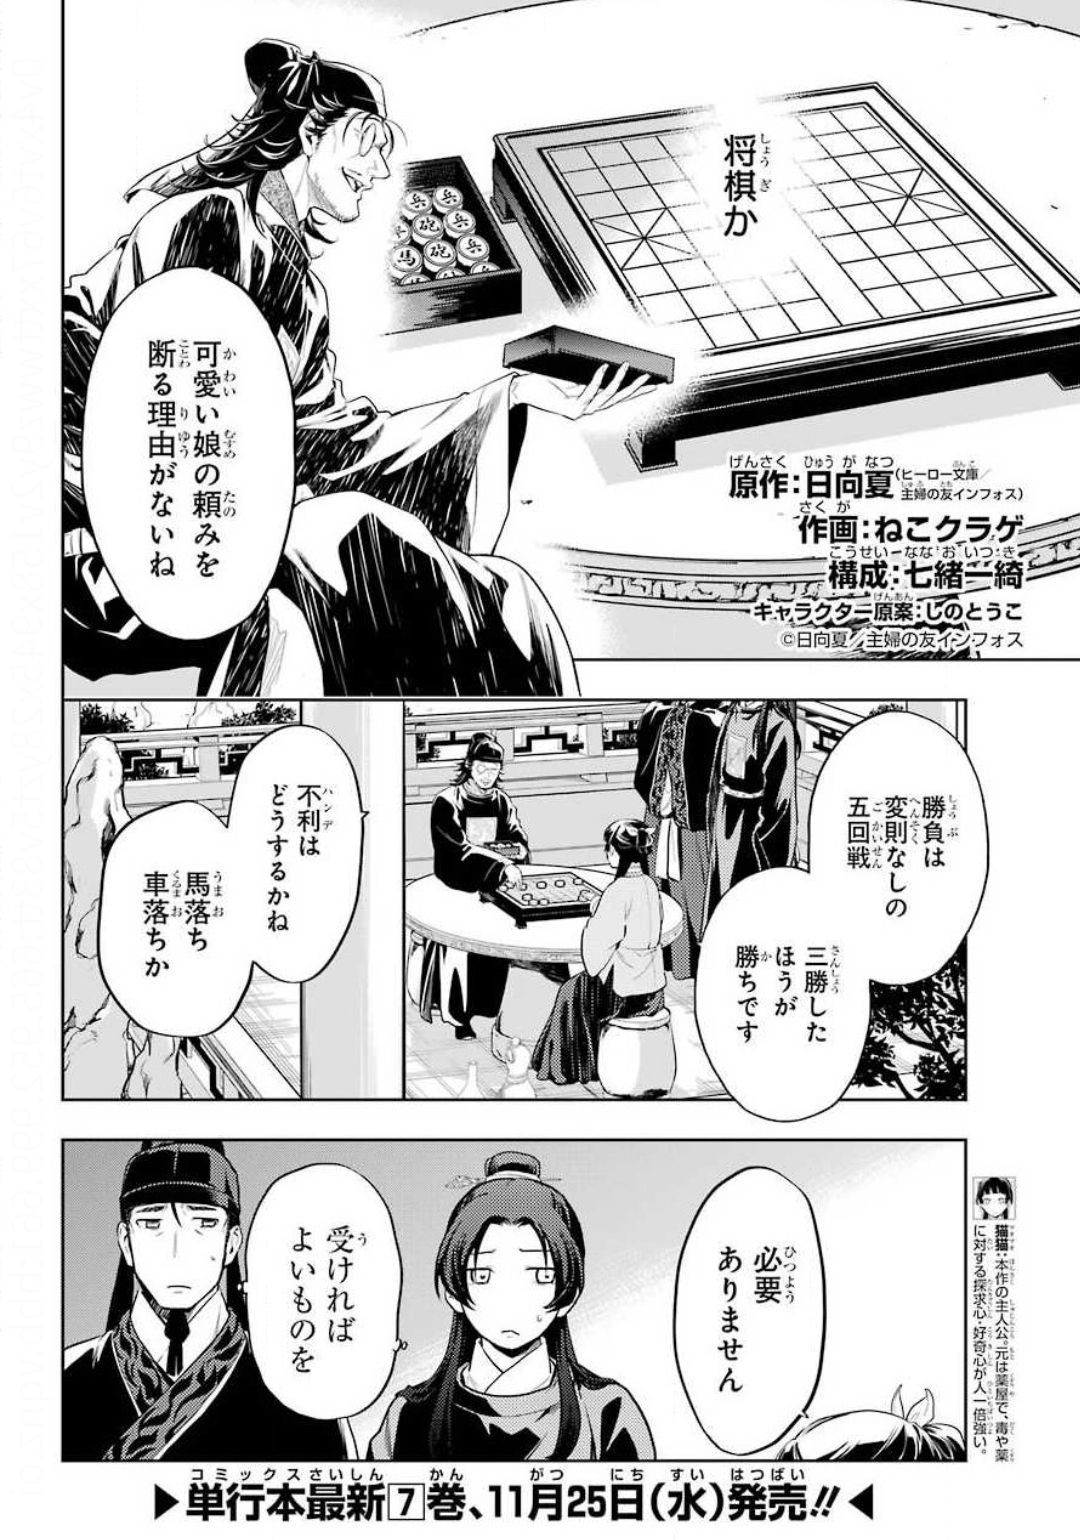 Kusuriya no Hitorigoto - Chapter 36-3 - Page 3